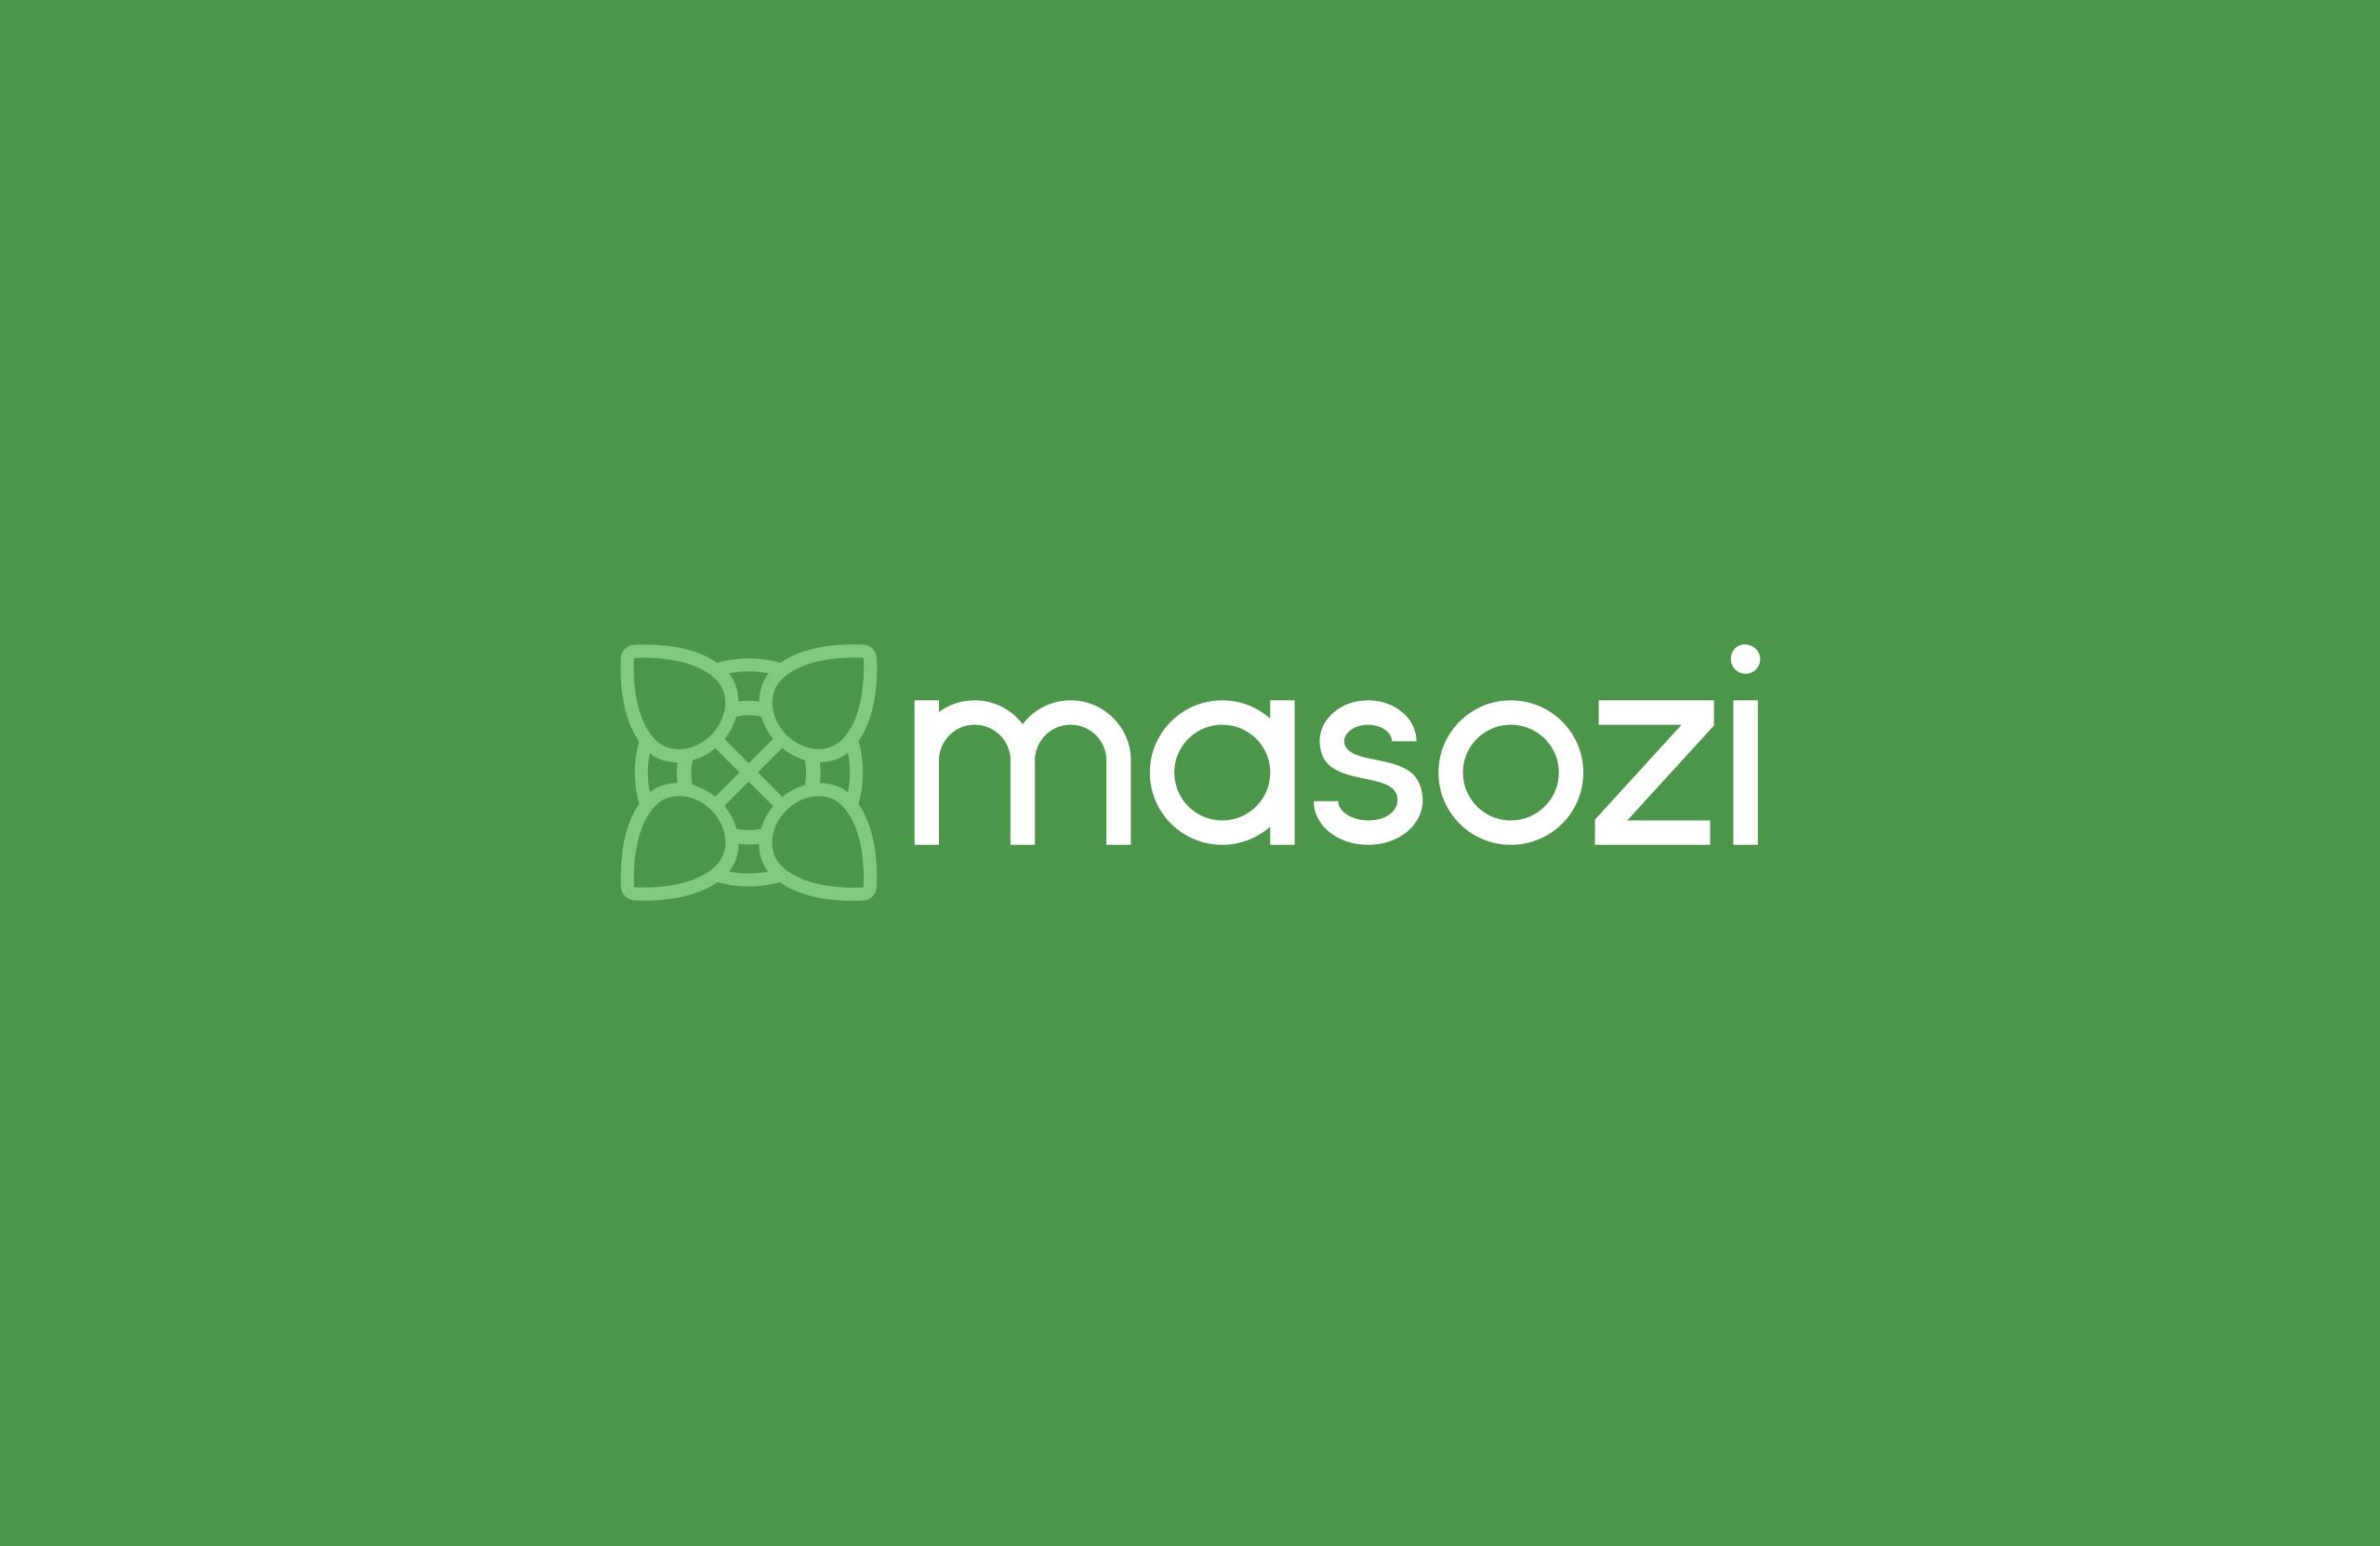 Masozi Logo by Garett Southerton, Creative Brand Strategist of Garett® based in Long Island, New York